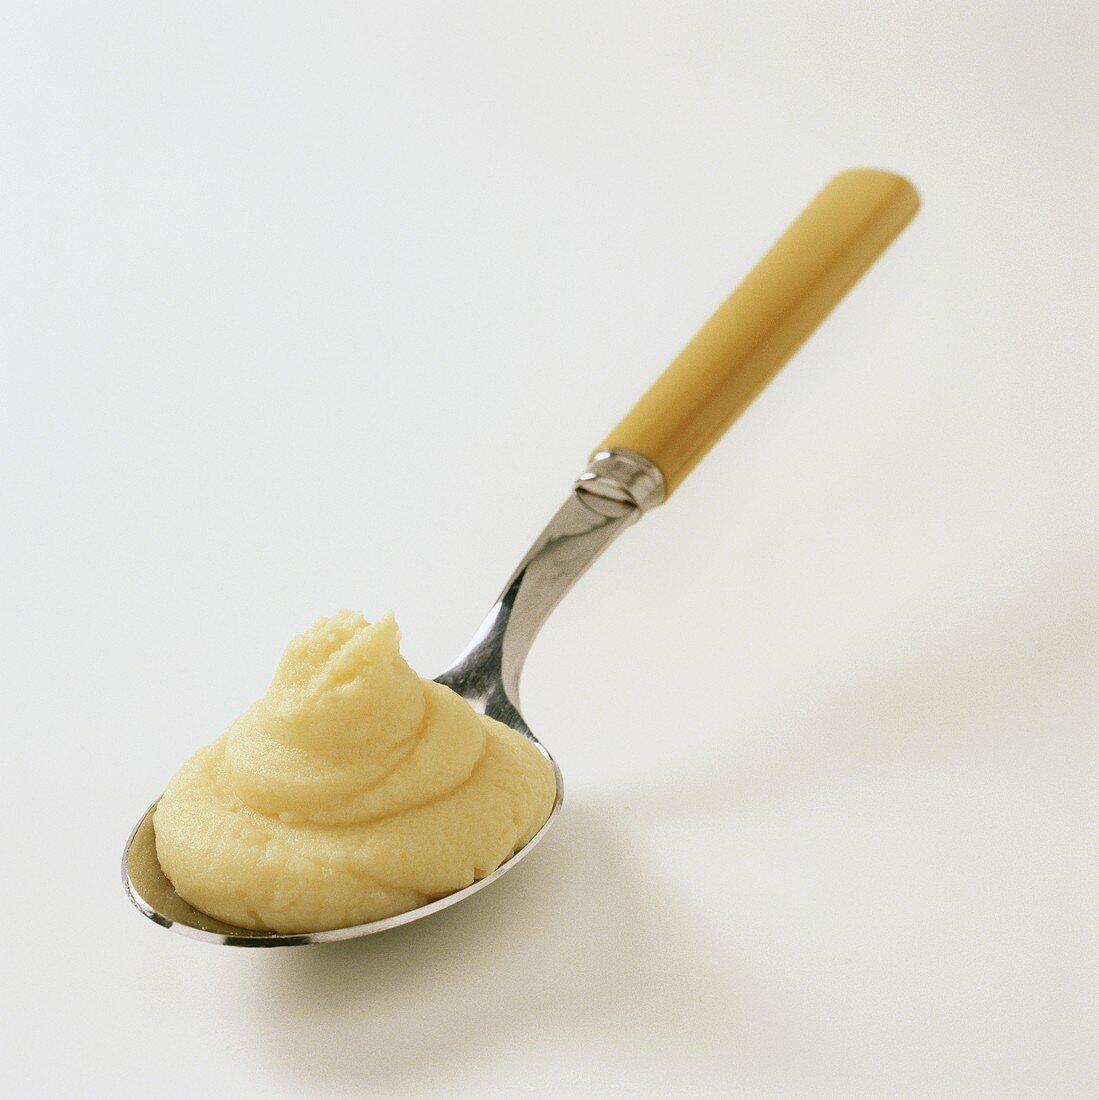 Mashed potato on a spoon